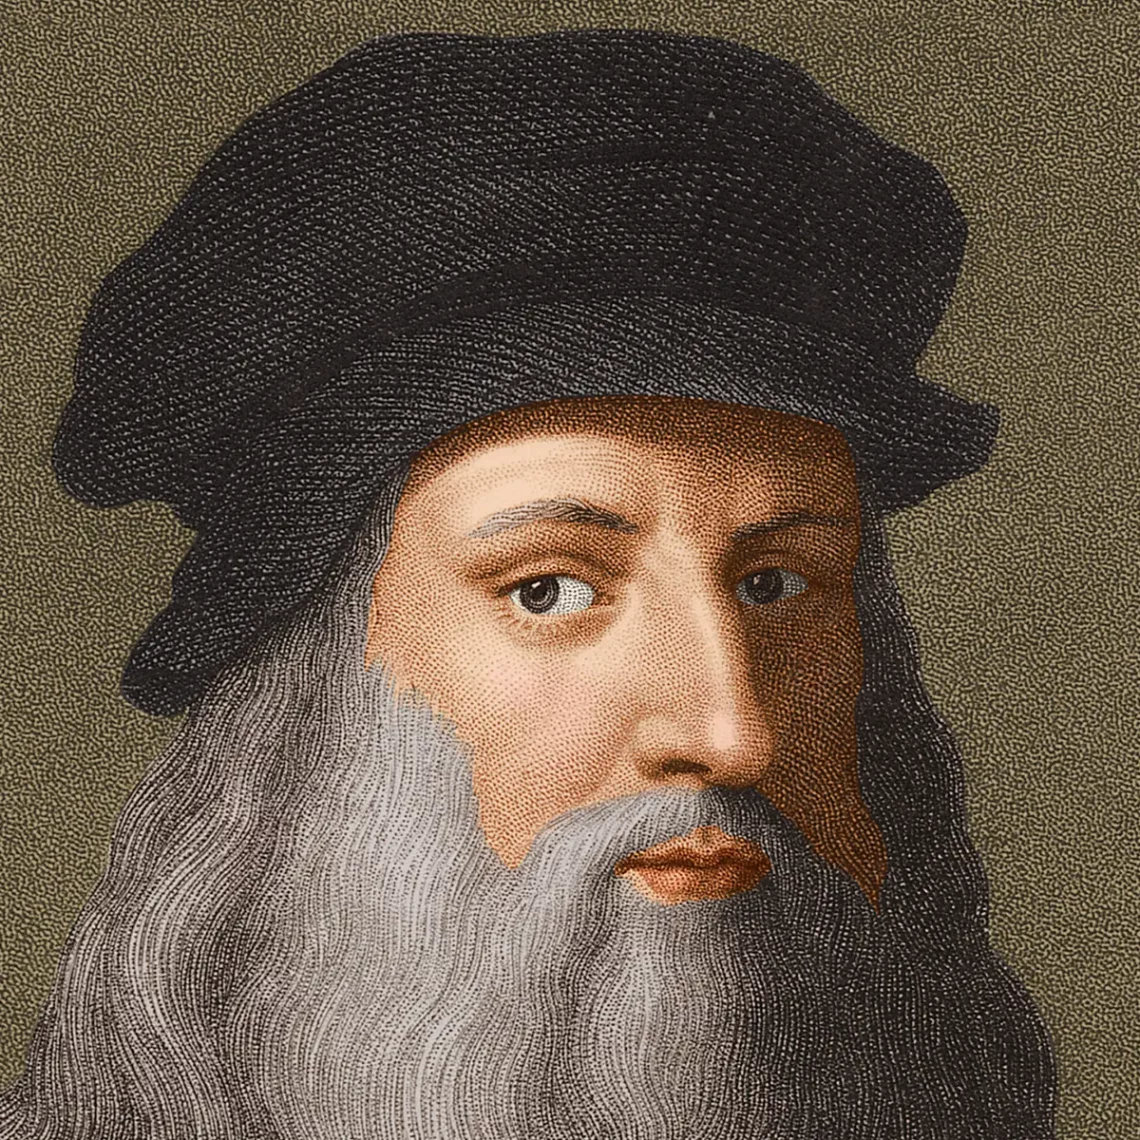 Leonardo da Vinci being still alive